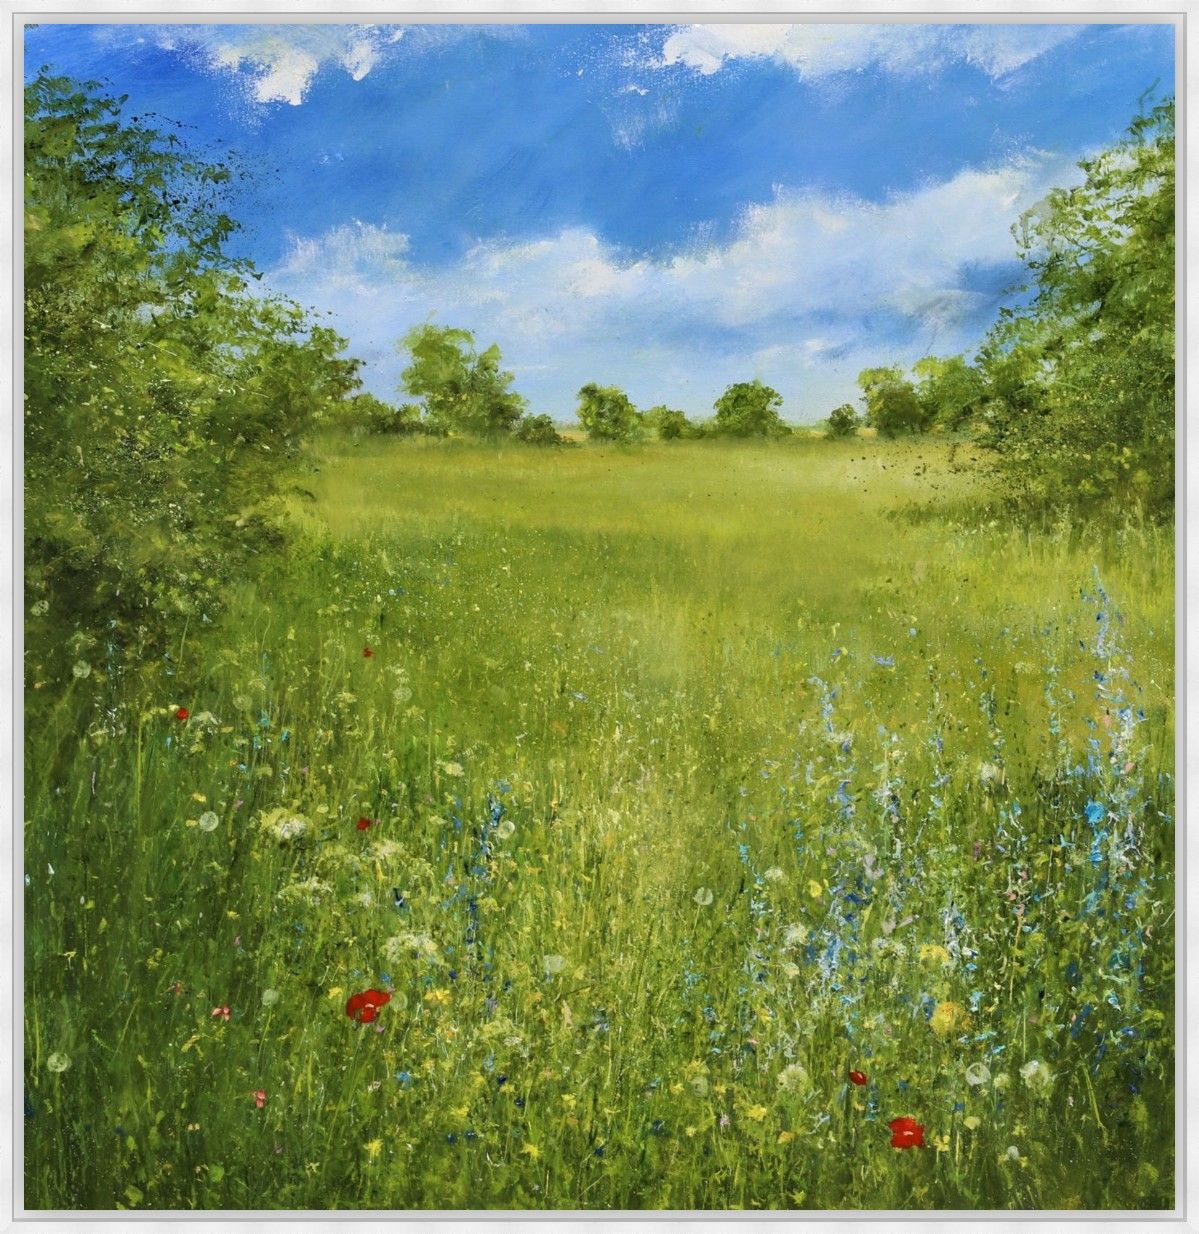 Wild Flower Meadow by Garry Pereira